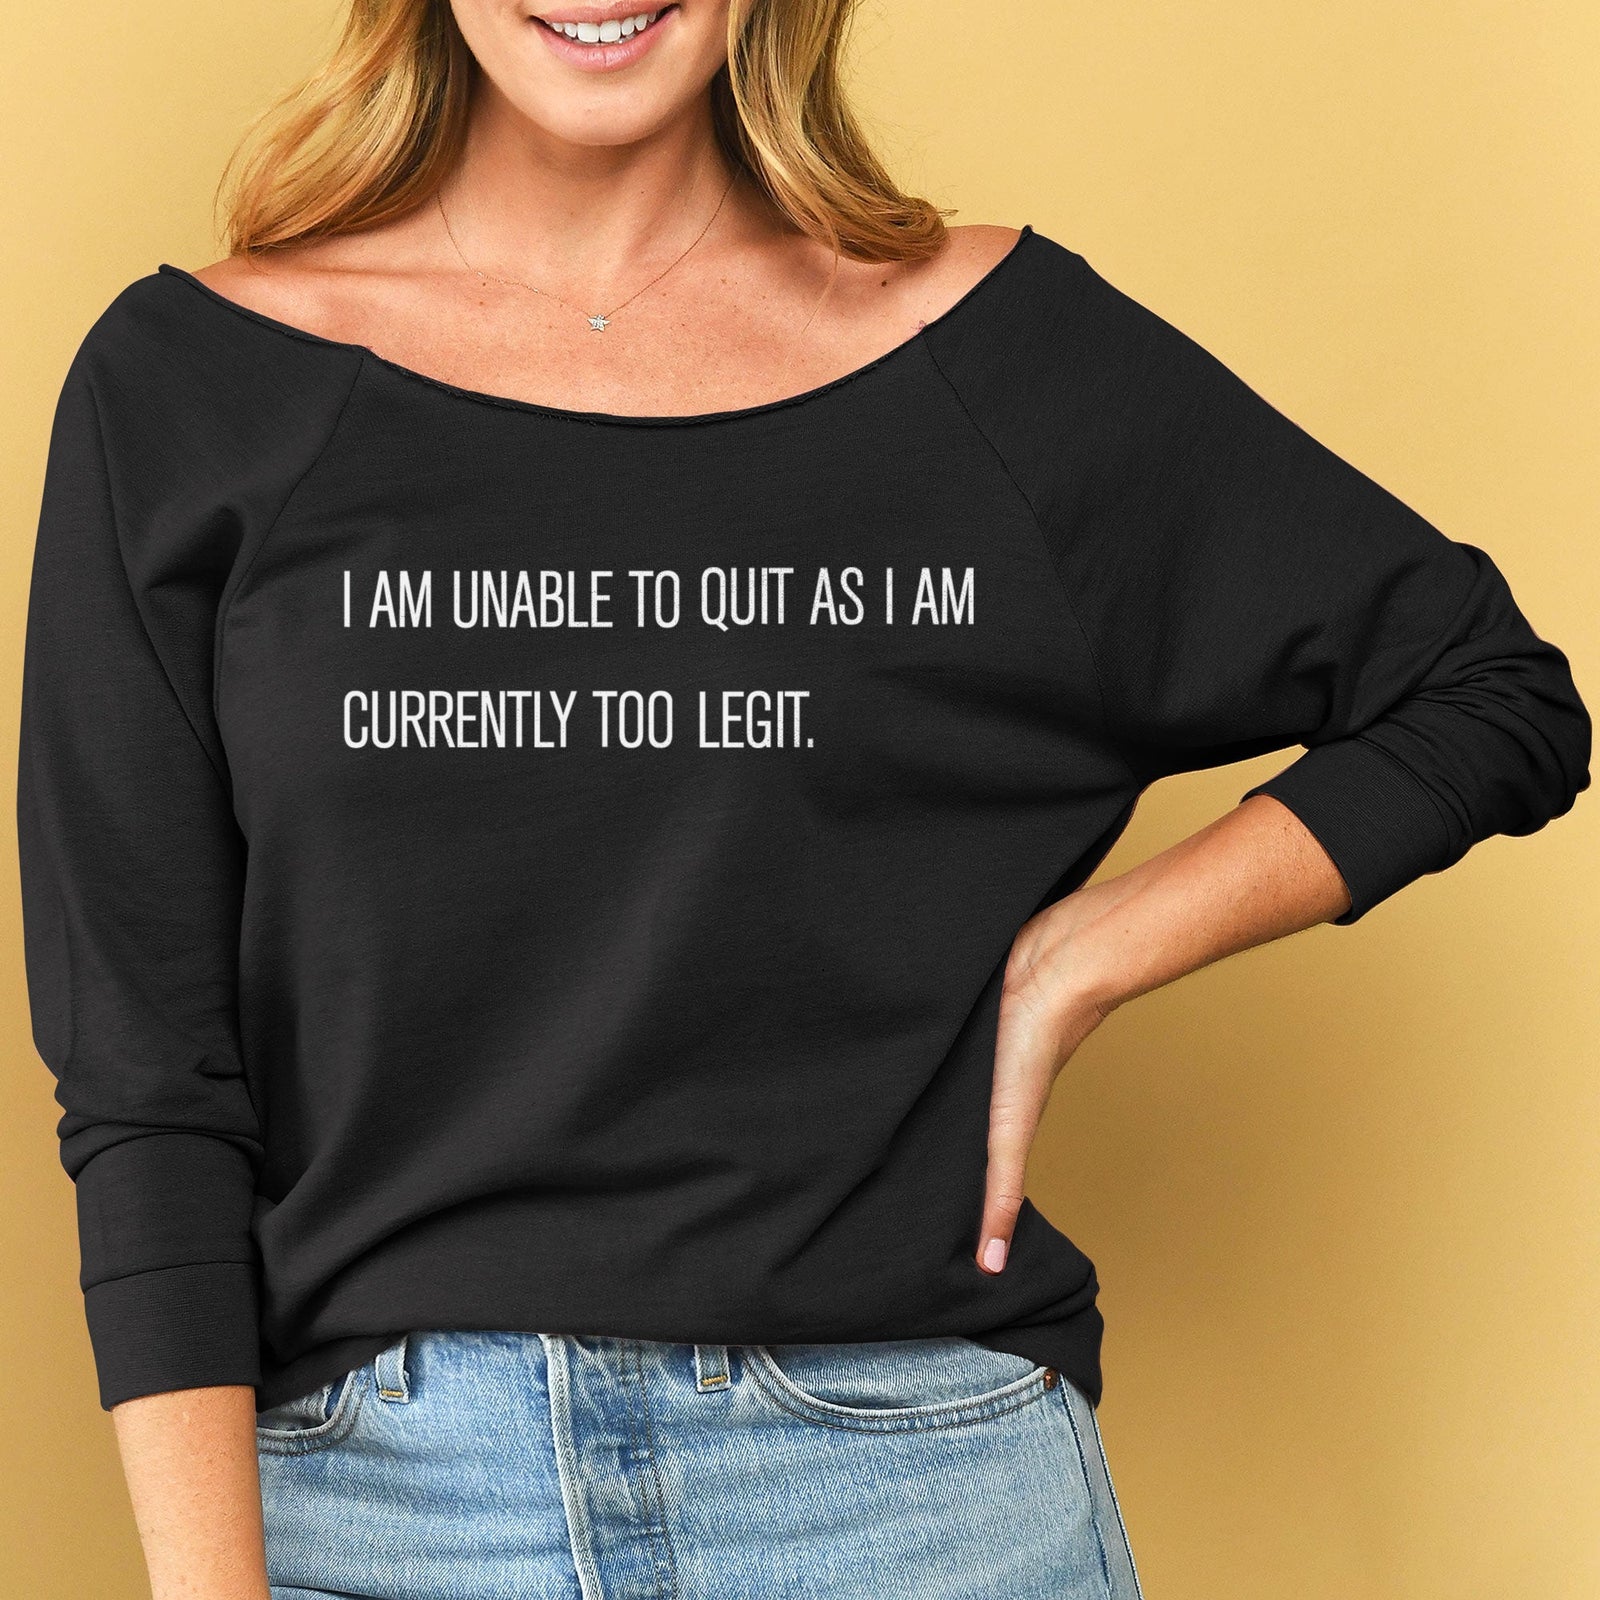 Too Legit To Quit Women's Graphic Printed Slouchy Lightweight Sweatshirt